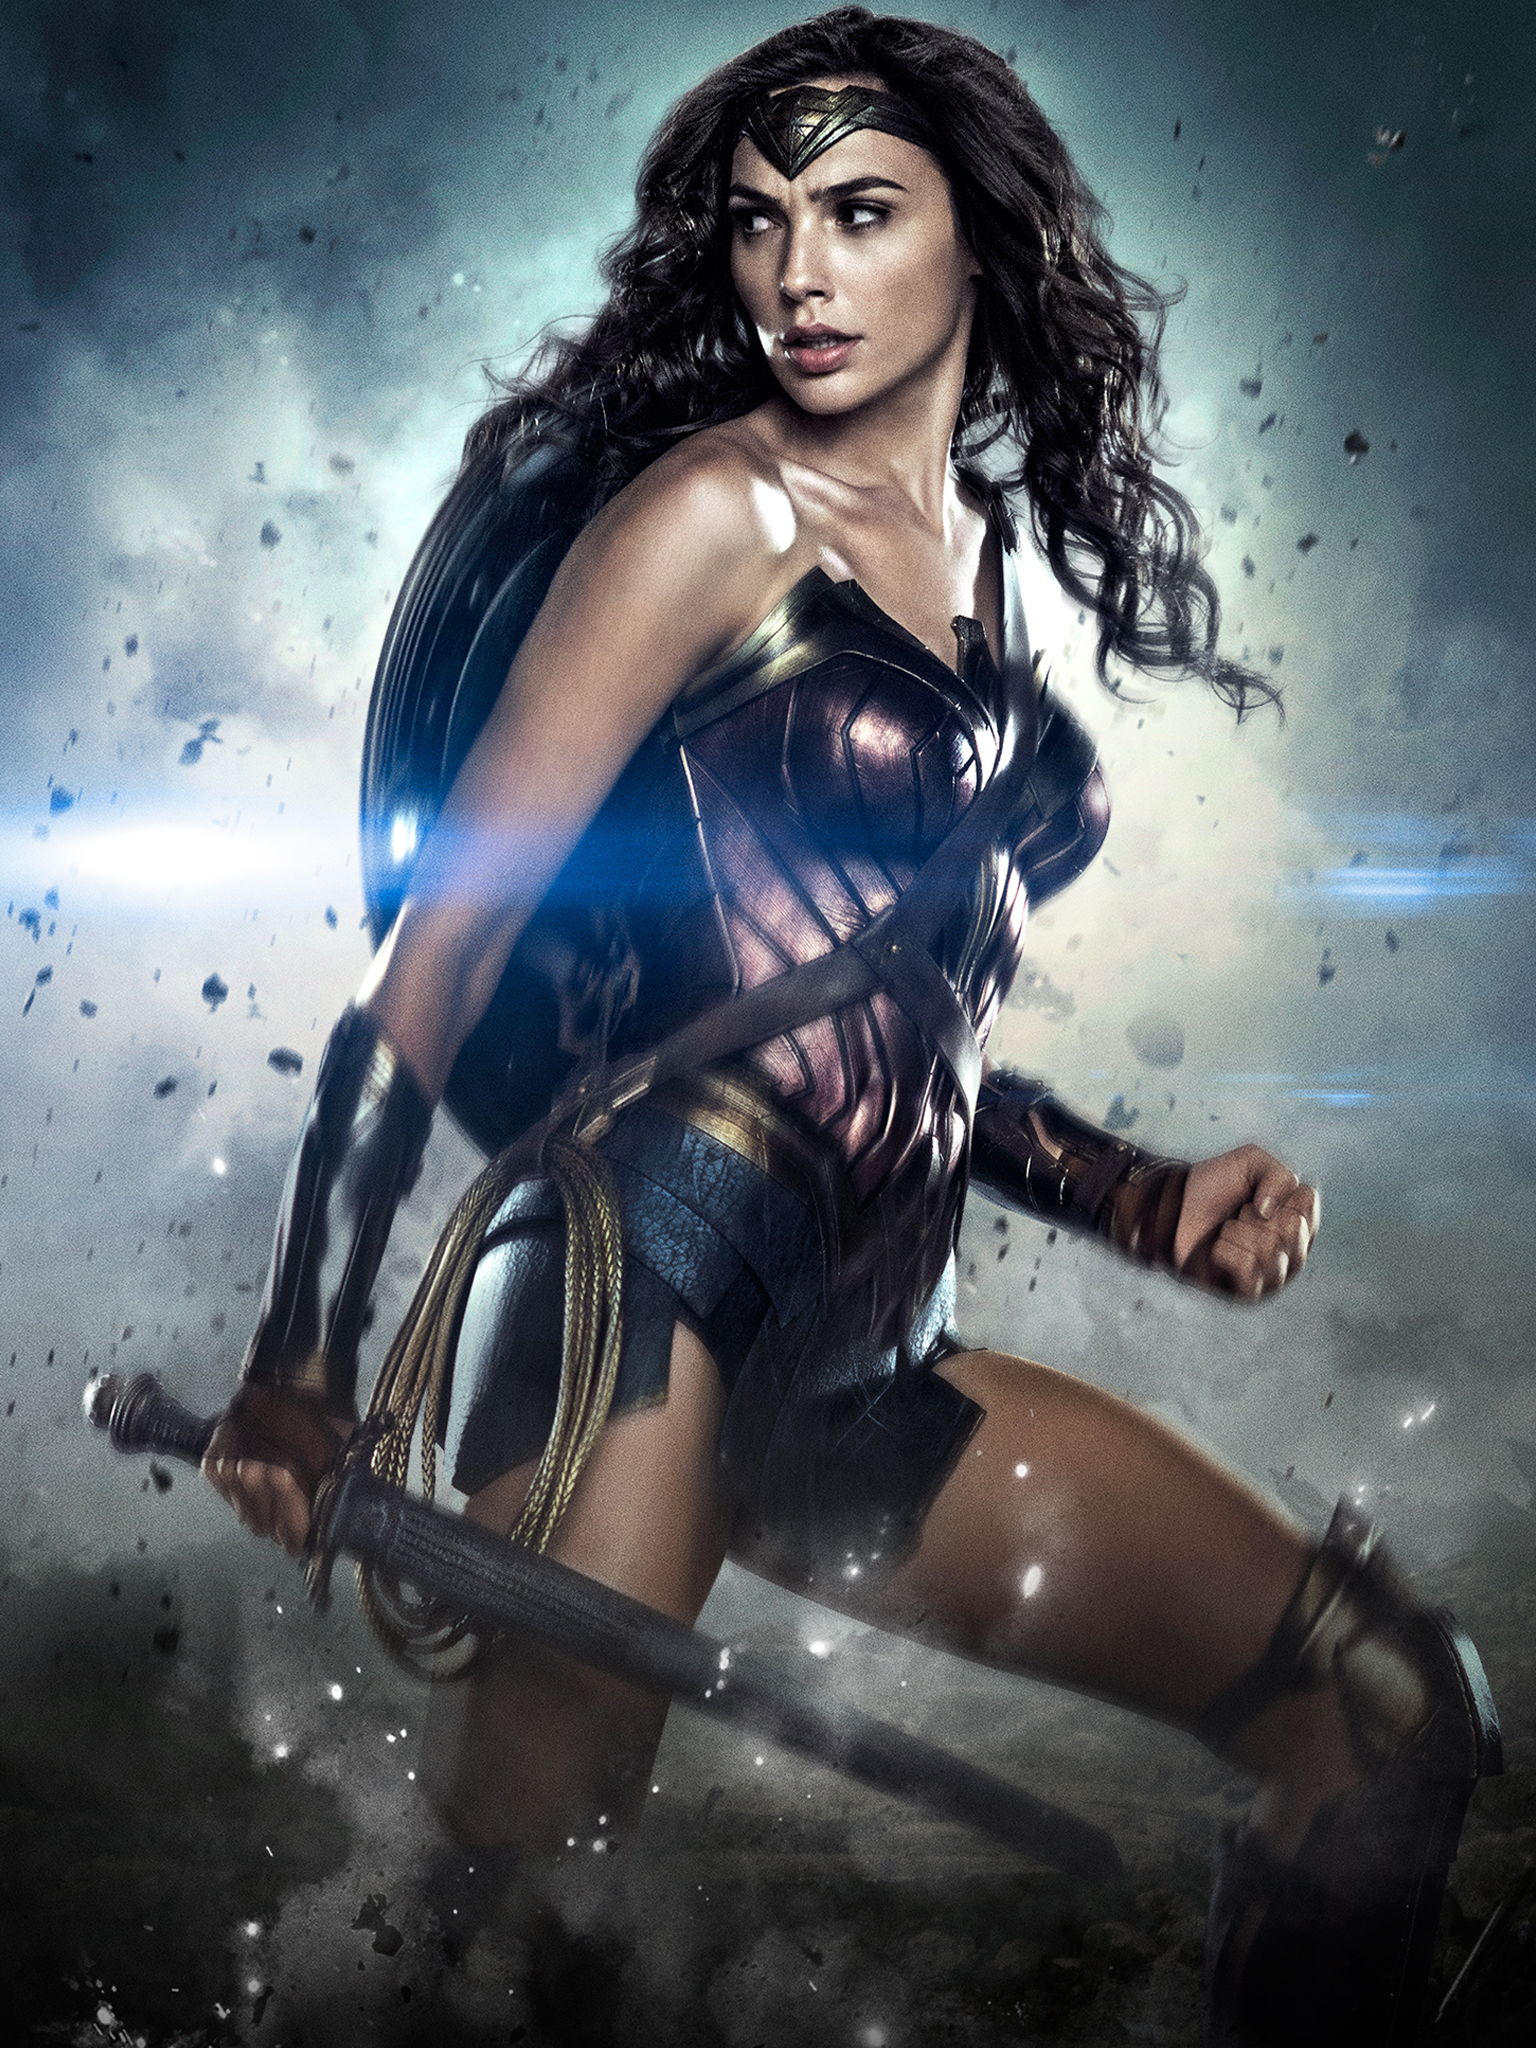 General 1536x2048 Wonder Woman Gal Gadot women DC Extended Universe superheroines movies portrait display